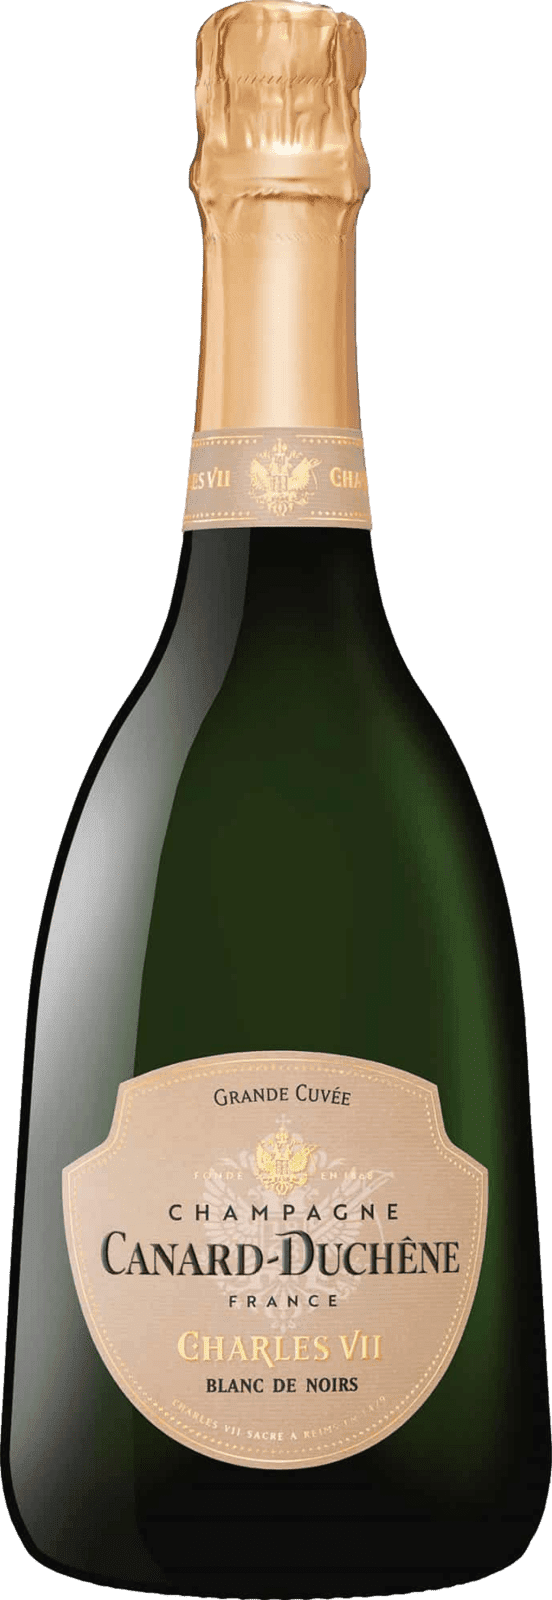 Champagne Canard-Duchene Grande Cuvee Charles VII Blanc de Noirs